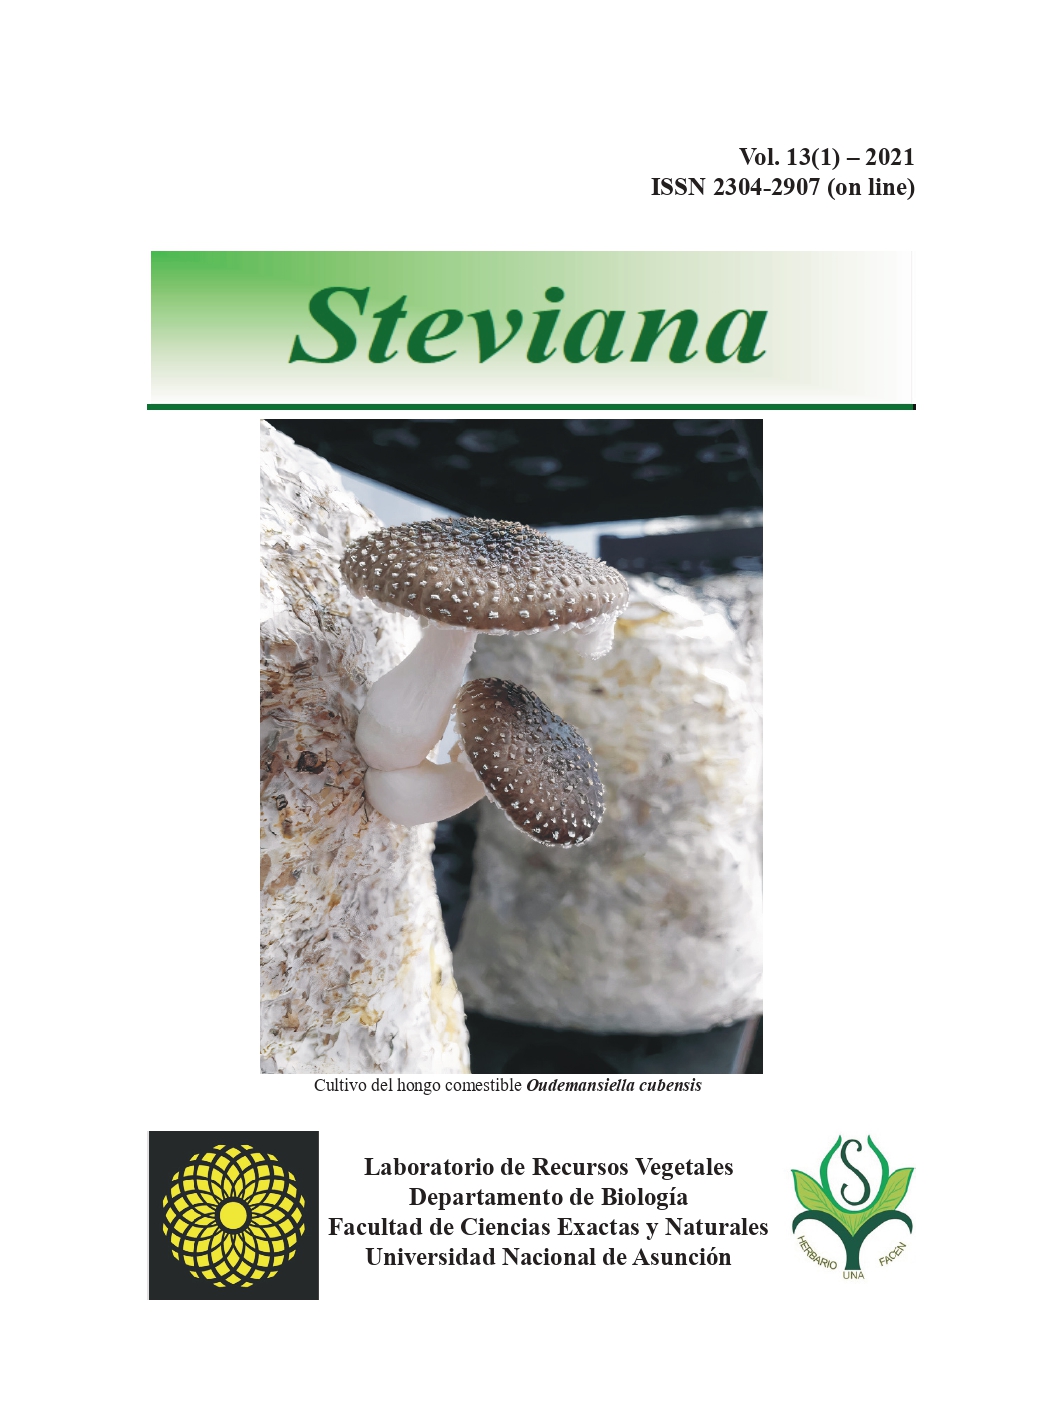 					Ver Vol. 13 Núm. 1 (2021): Steviana
				